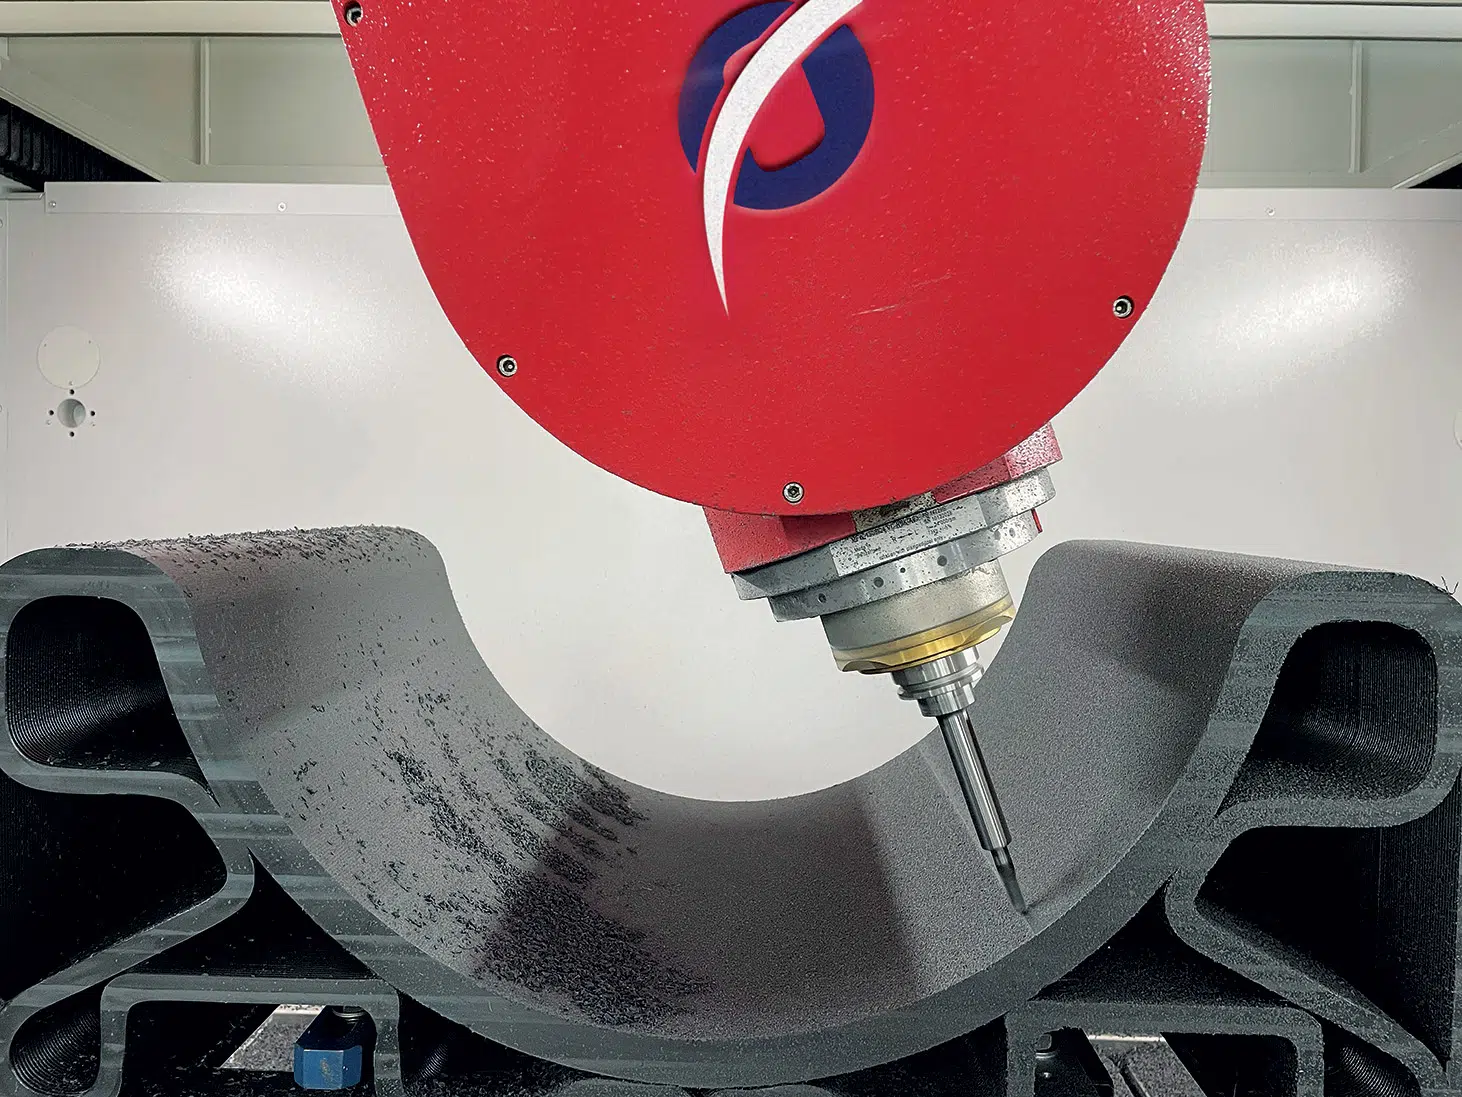  Cnc milling on carbon fiber mould for aerospace application